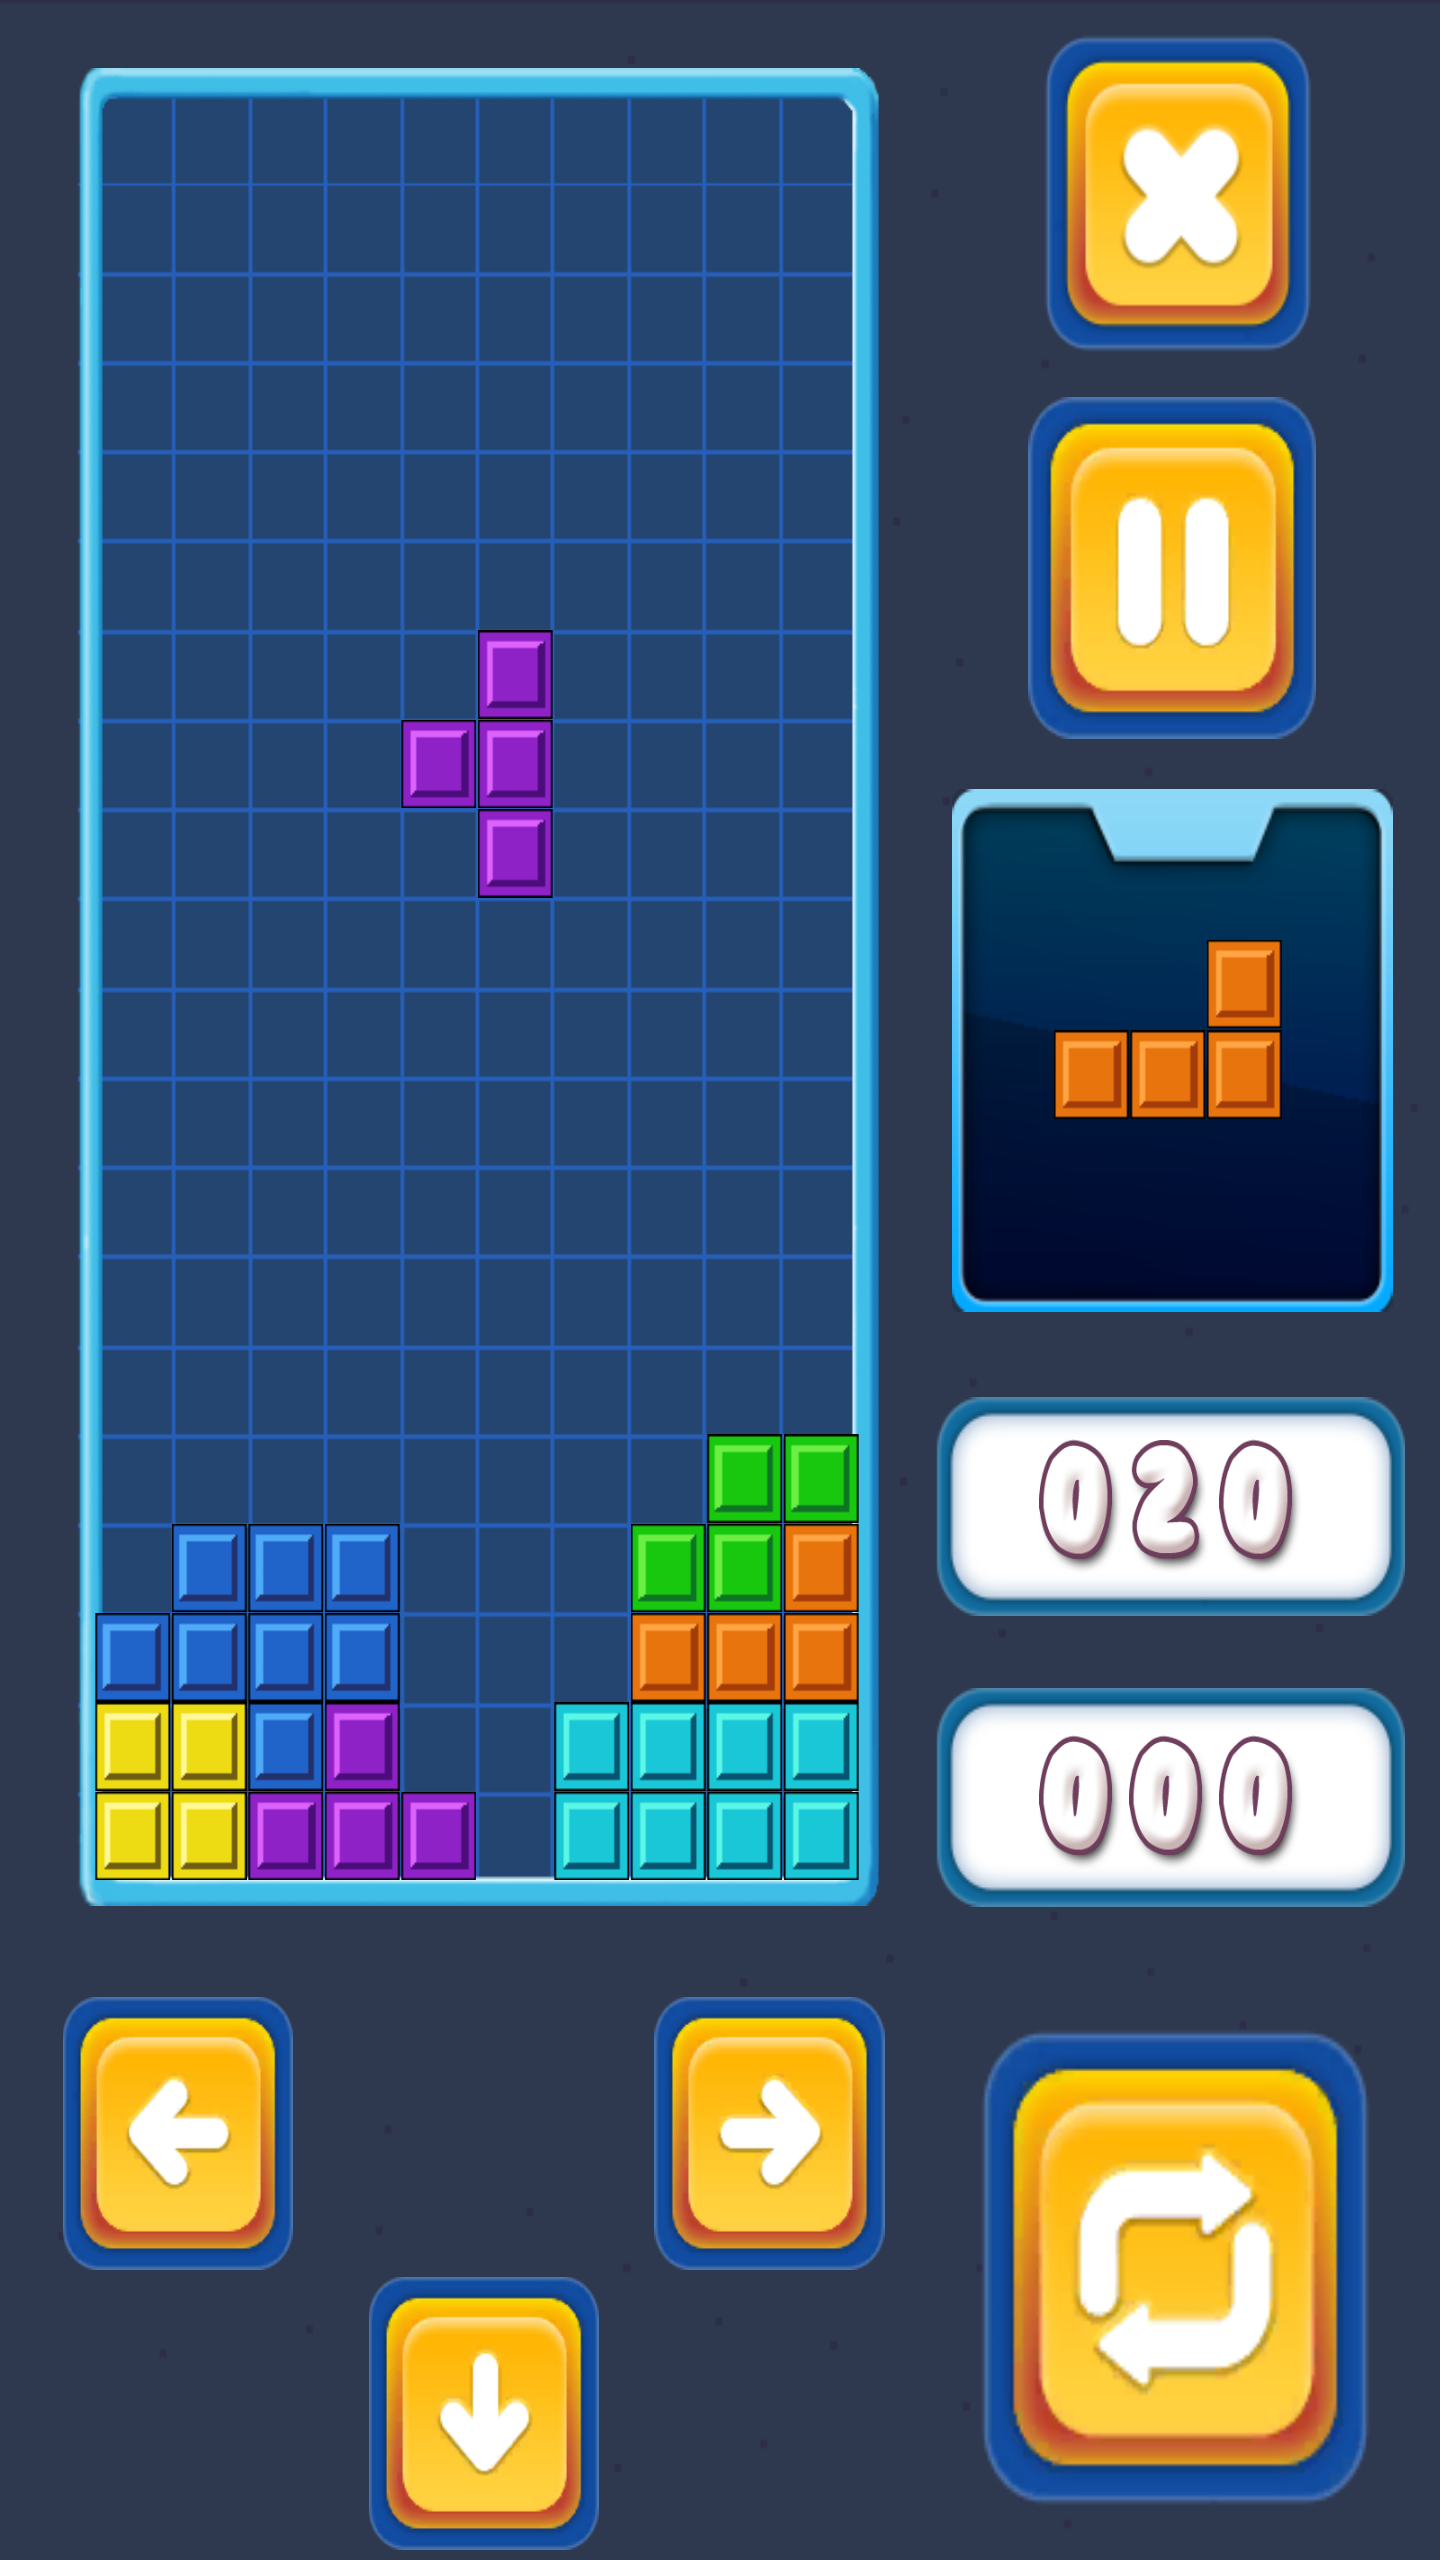 Screenshot 1 of Tetris classico in mattoni 1.0